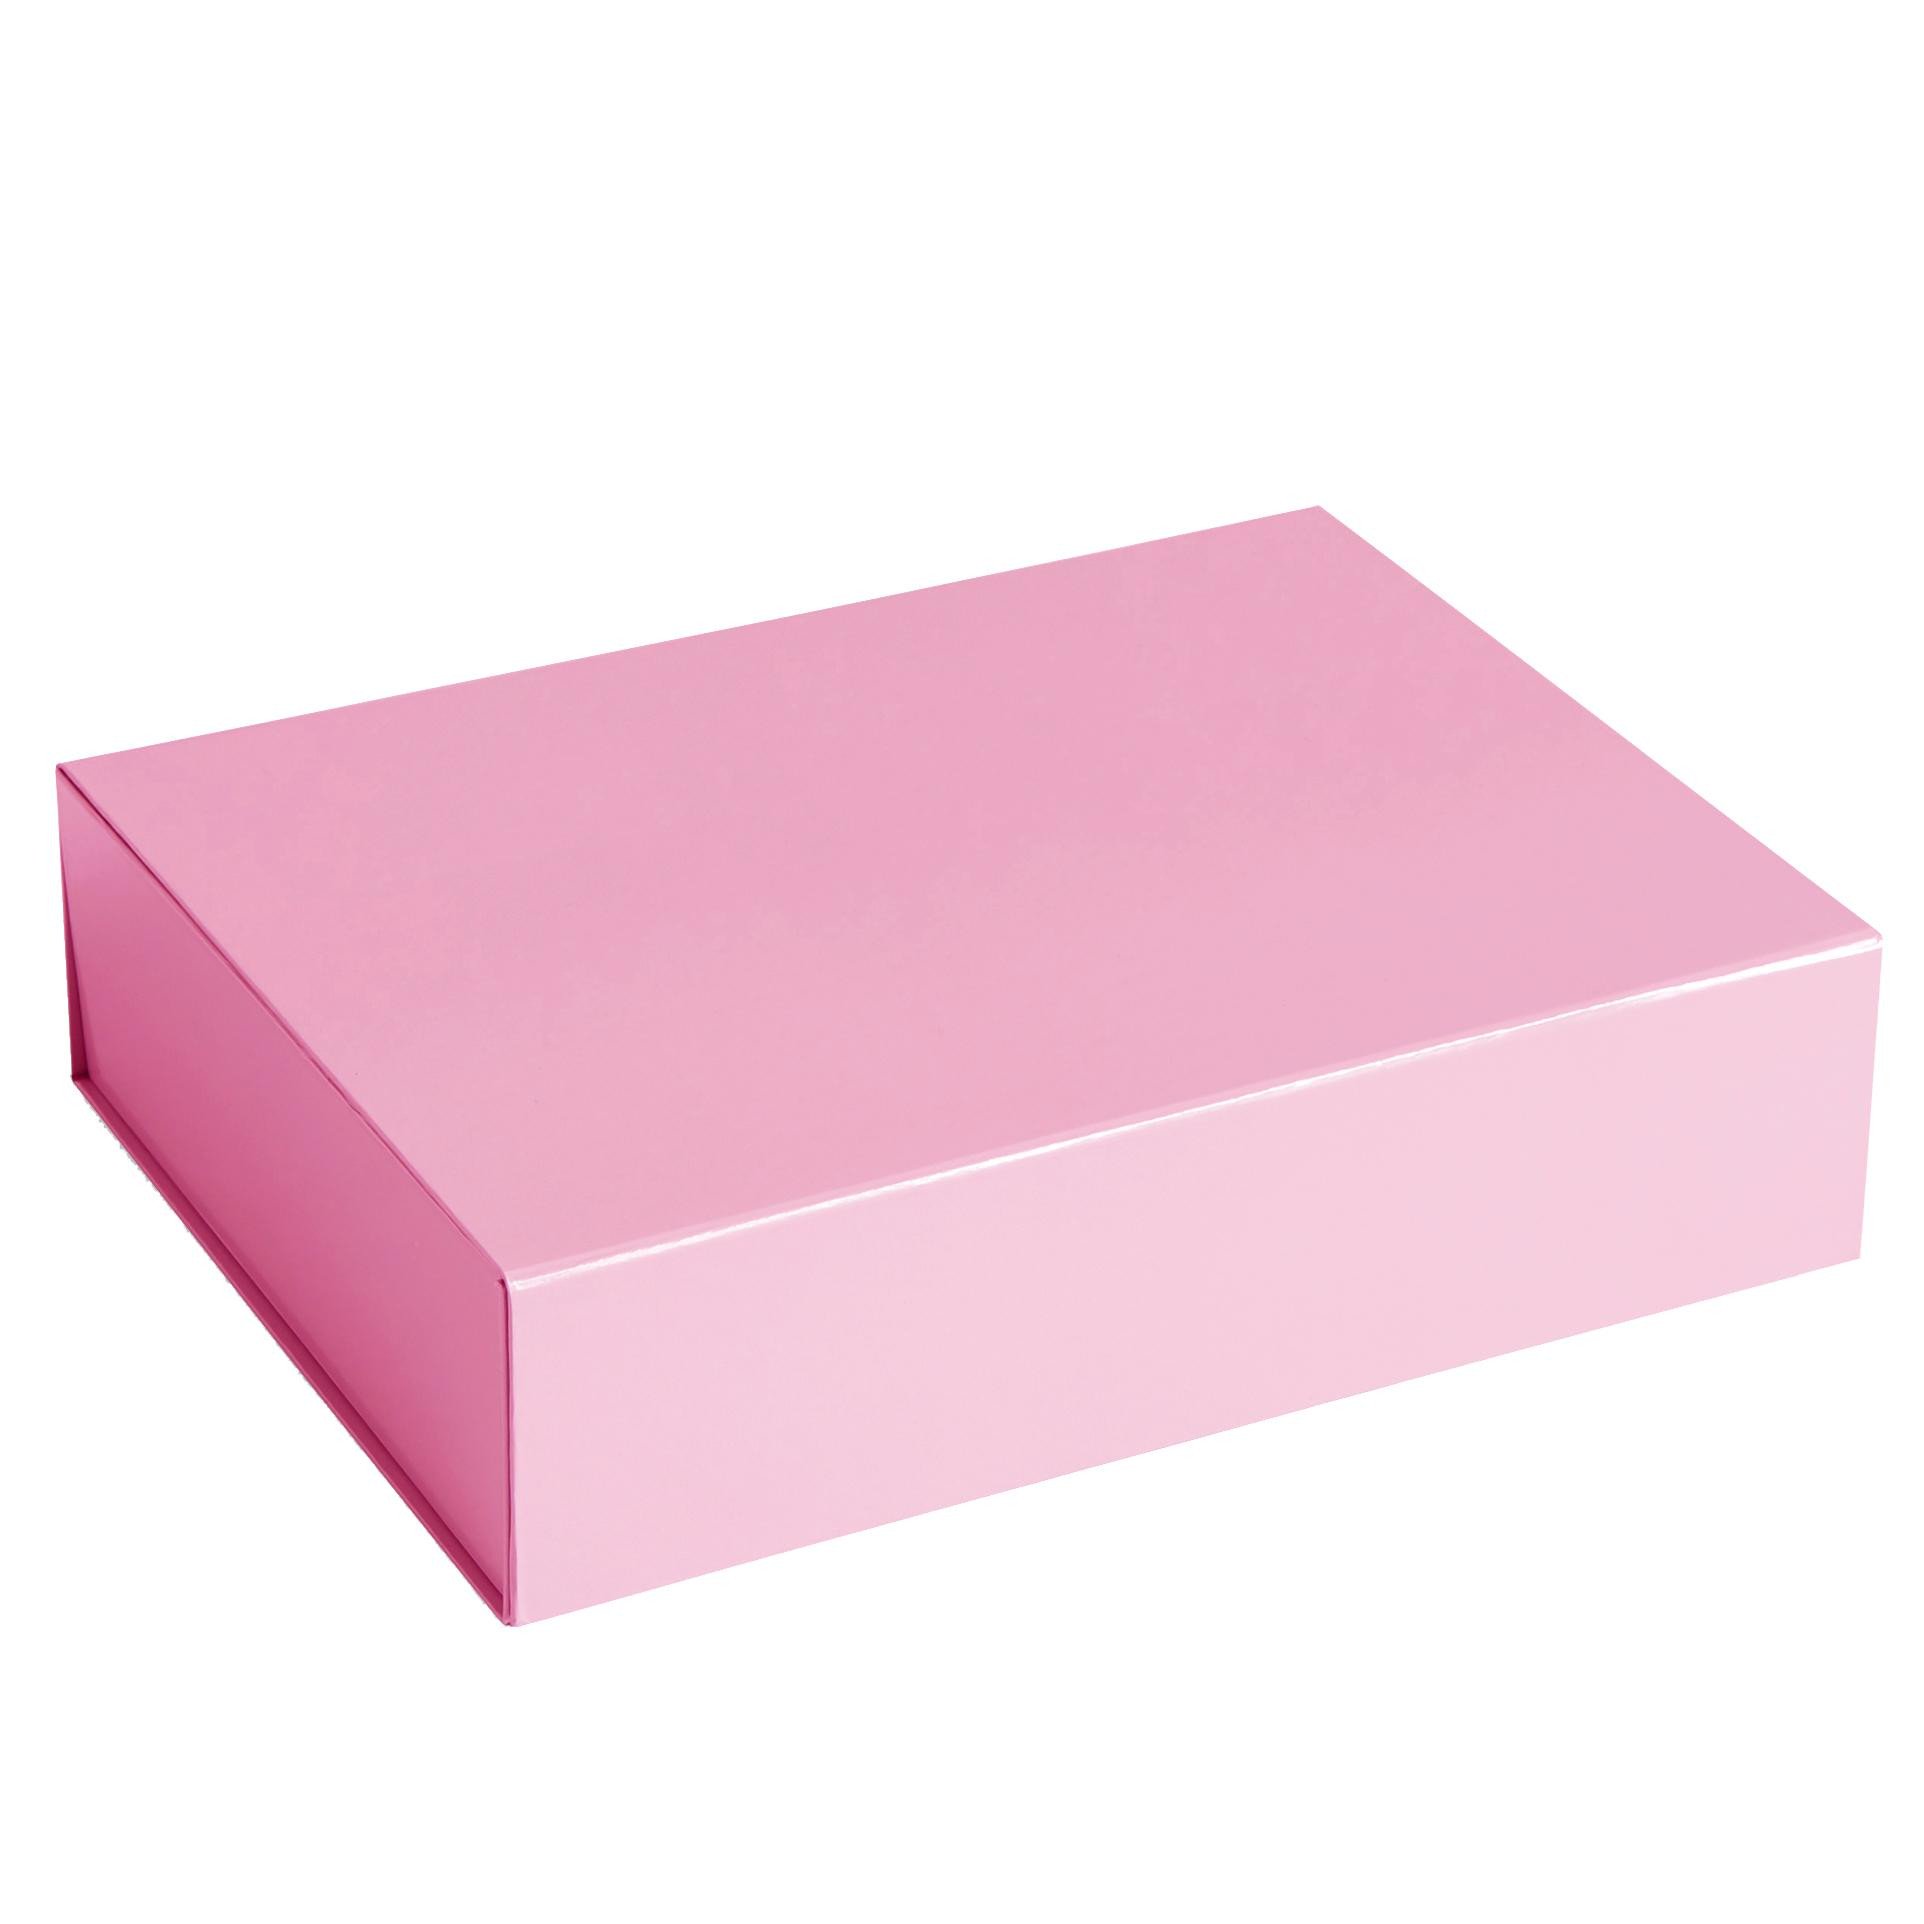 partij Treble vieren Hay Colour Storage opberger S light pink | Flinders